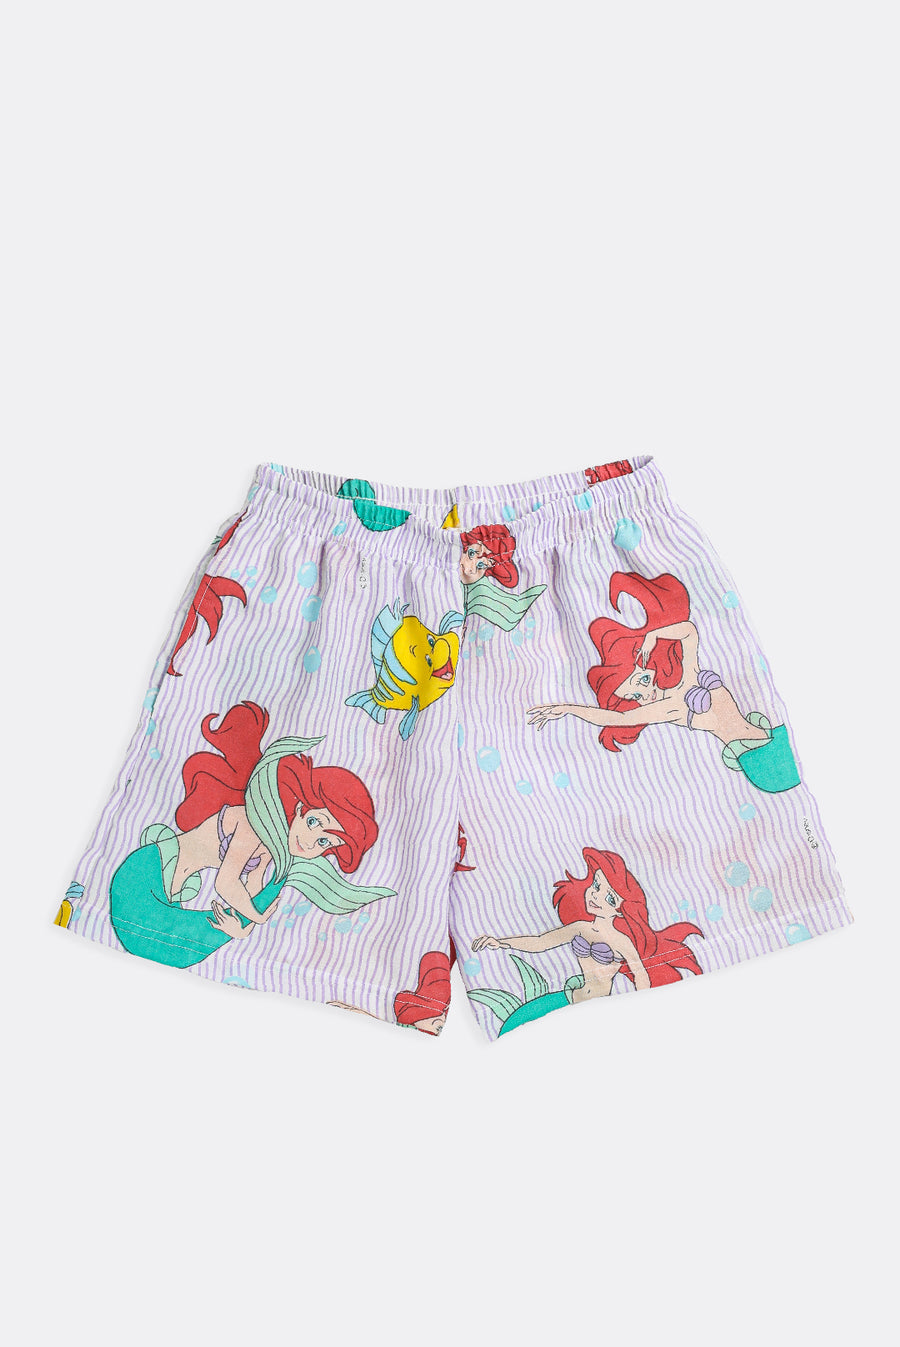 Unisex Rework The Little Mermaid Boxer Shorts - XS, M